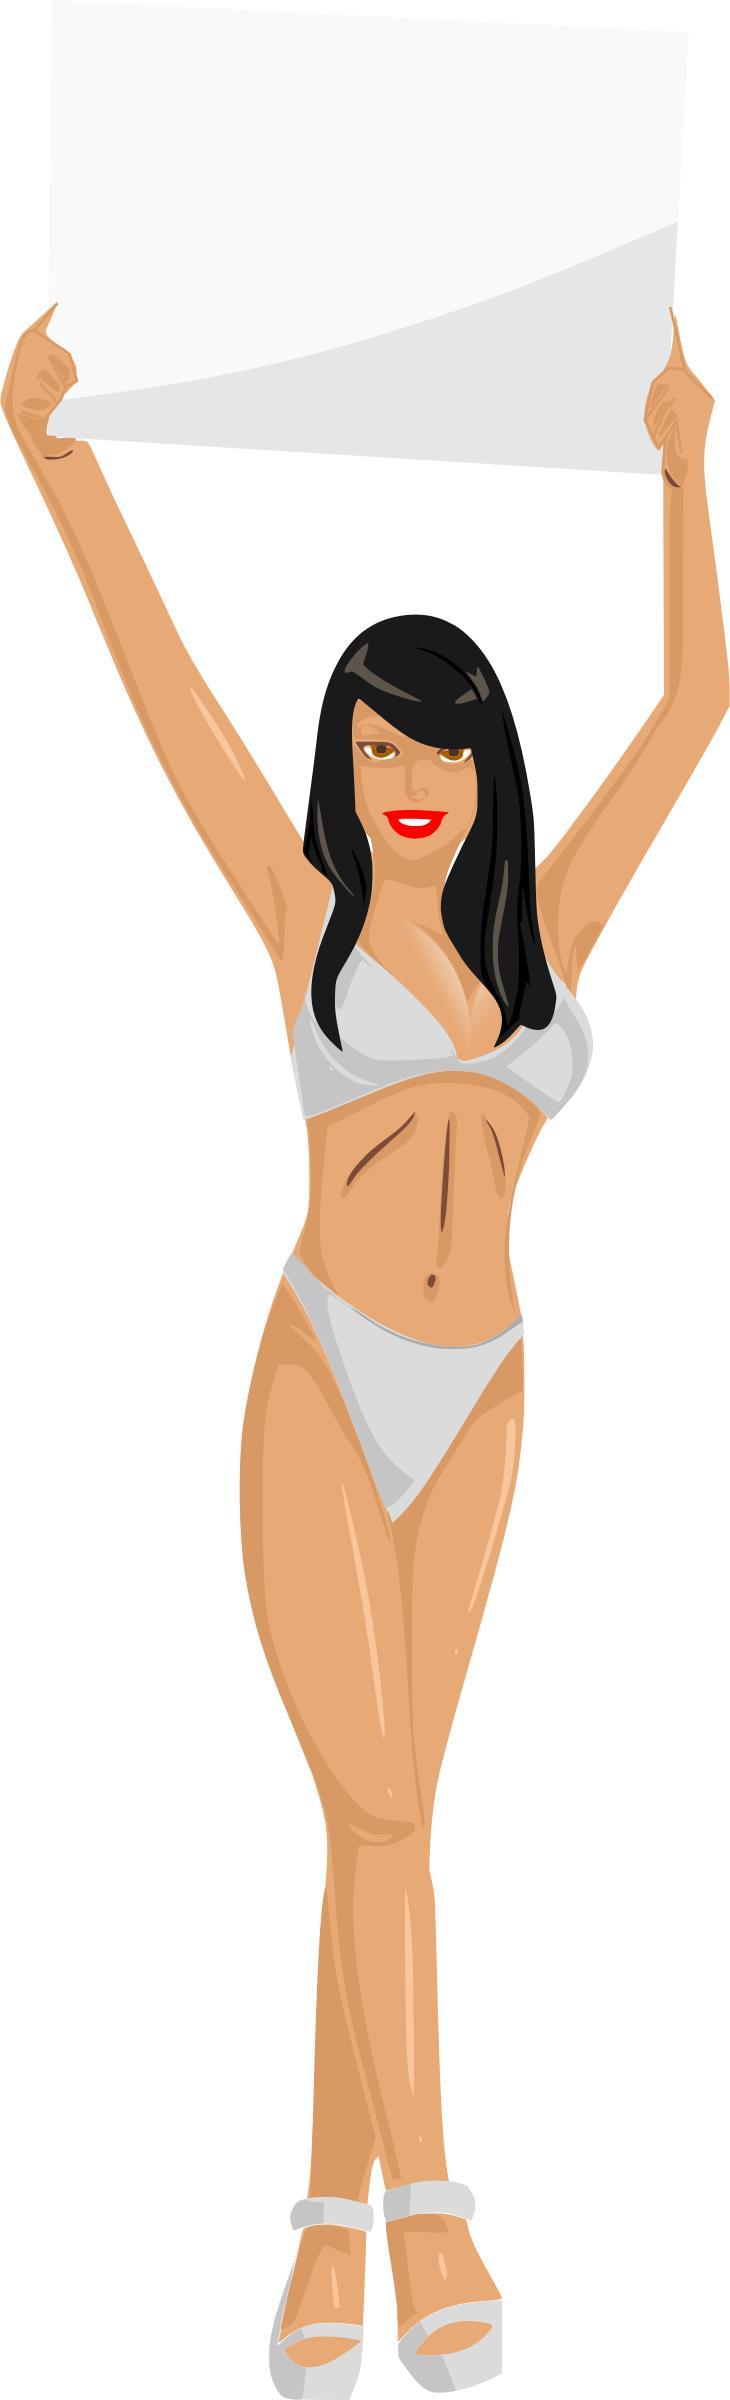 Girl with sign (white bikini, black hair, light skin) png transparent